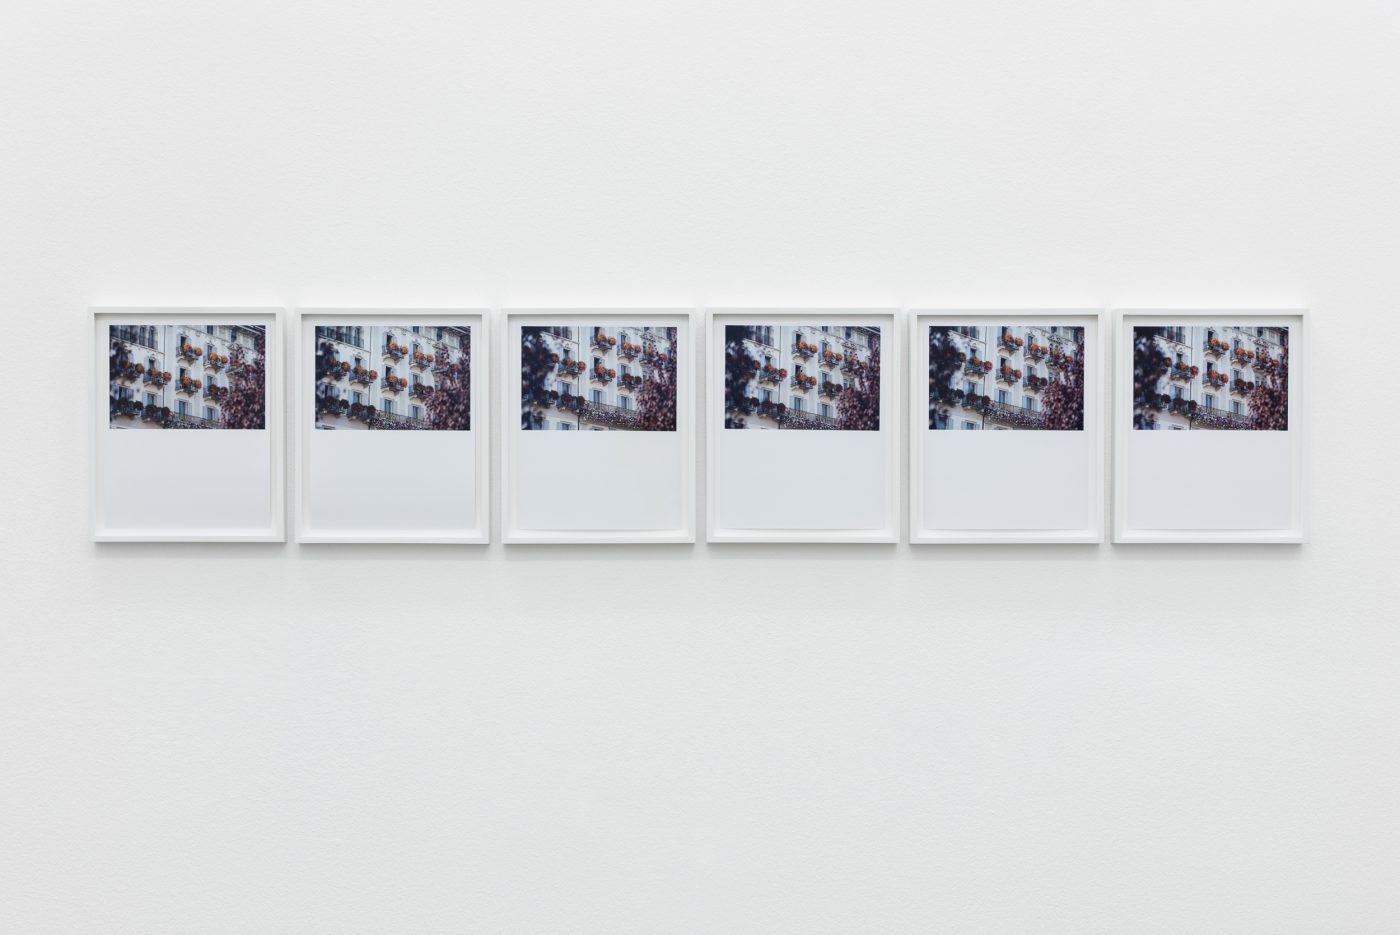 Daniel Gustav Cramer, Tales 44 (Stresa, Lago Maggiore, Italy, September 2012), 2013. C-print, framed. 6 x (25.5 x 20.5 cm). Ed. 5
 
